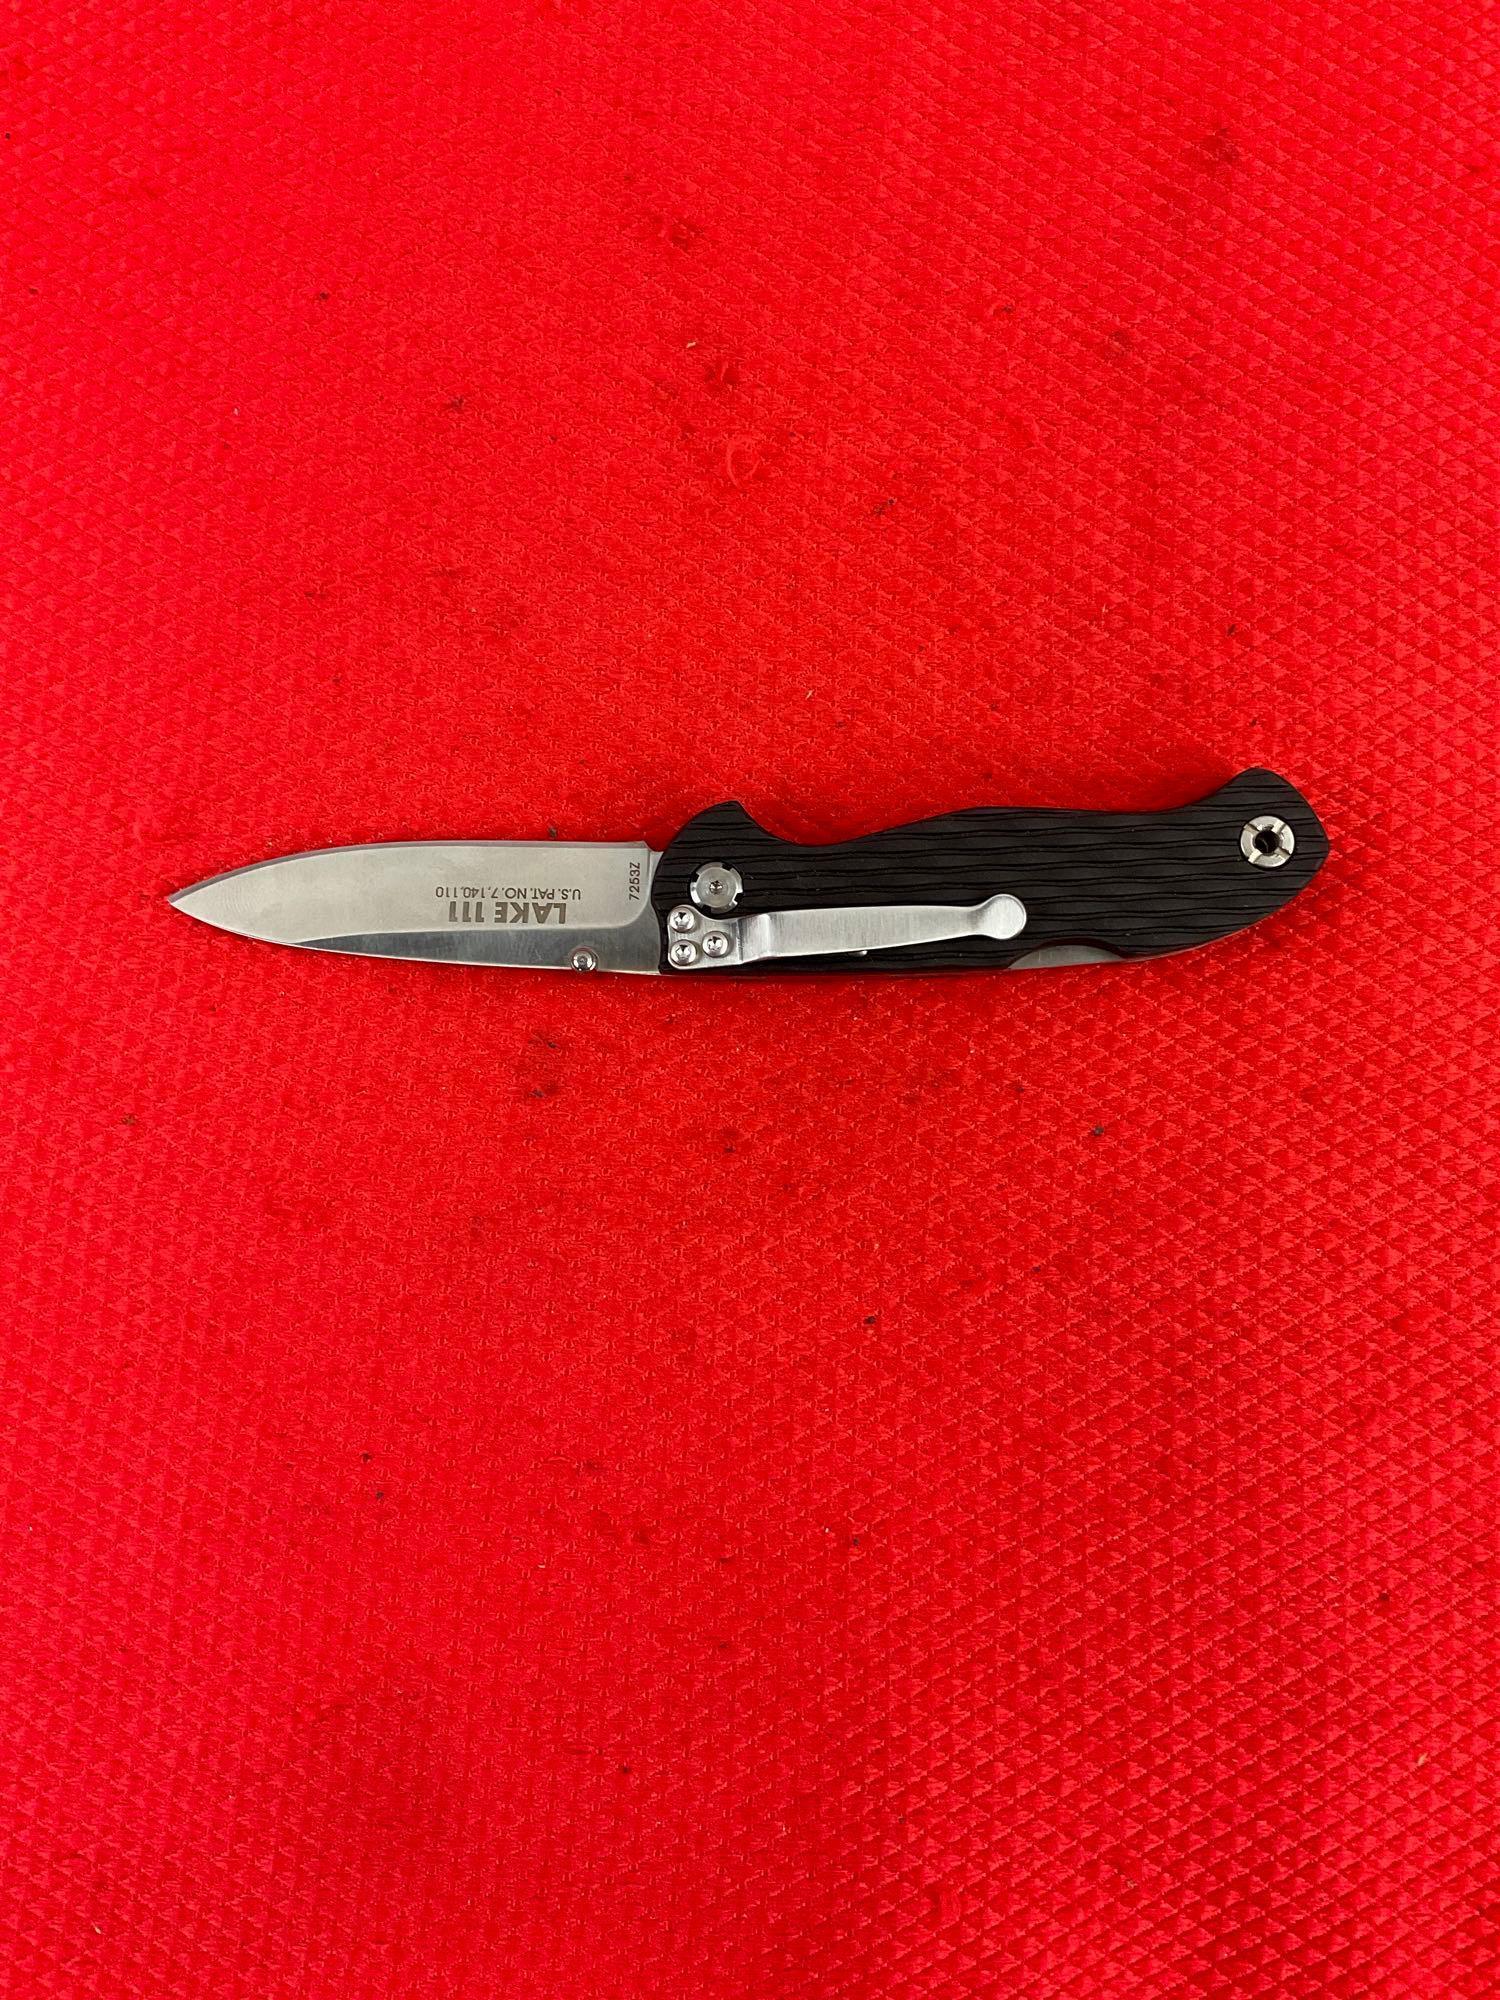 CRKT Steel 2.5" Folding Blade Pocket Knife Model 7253Z Lake 111 Mountaineer Knife. NIB. See pics.